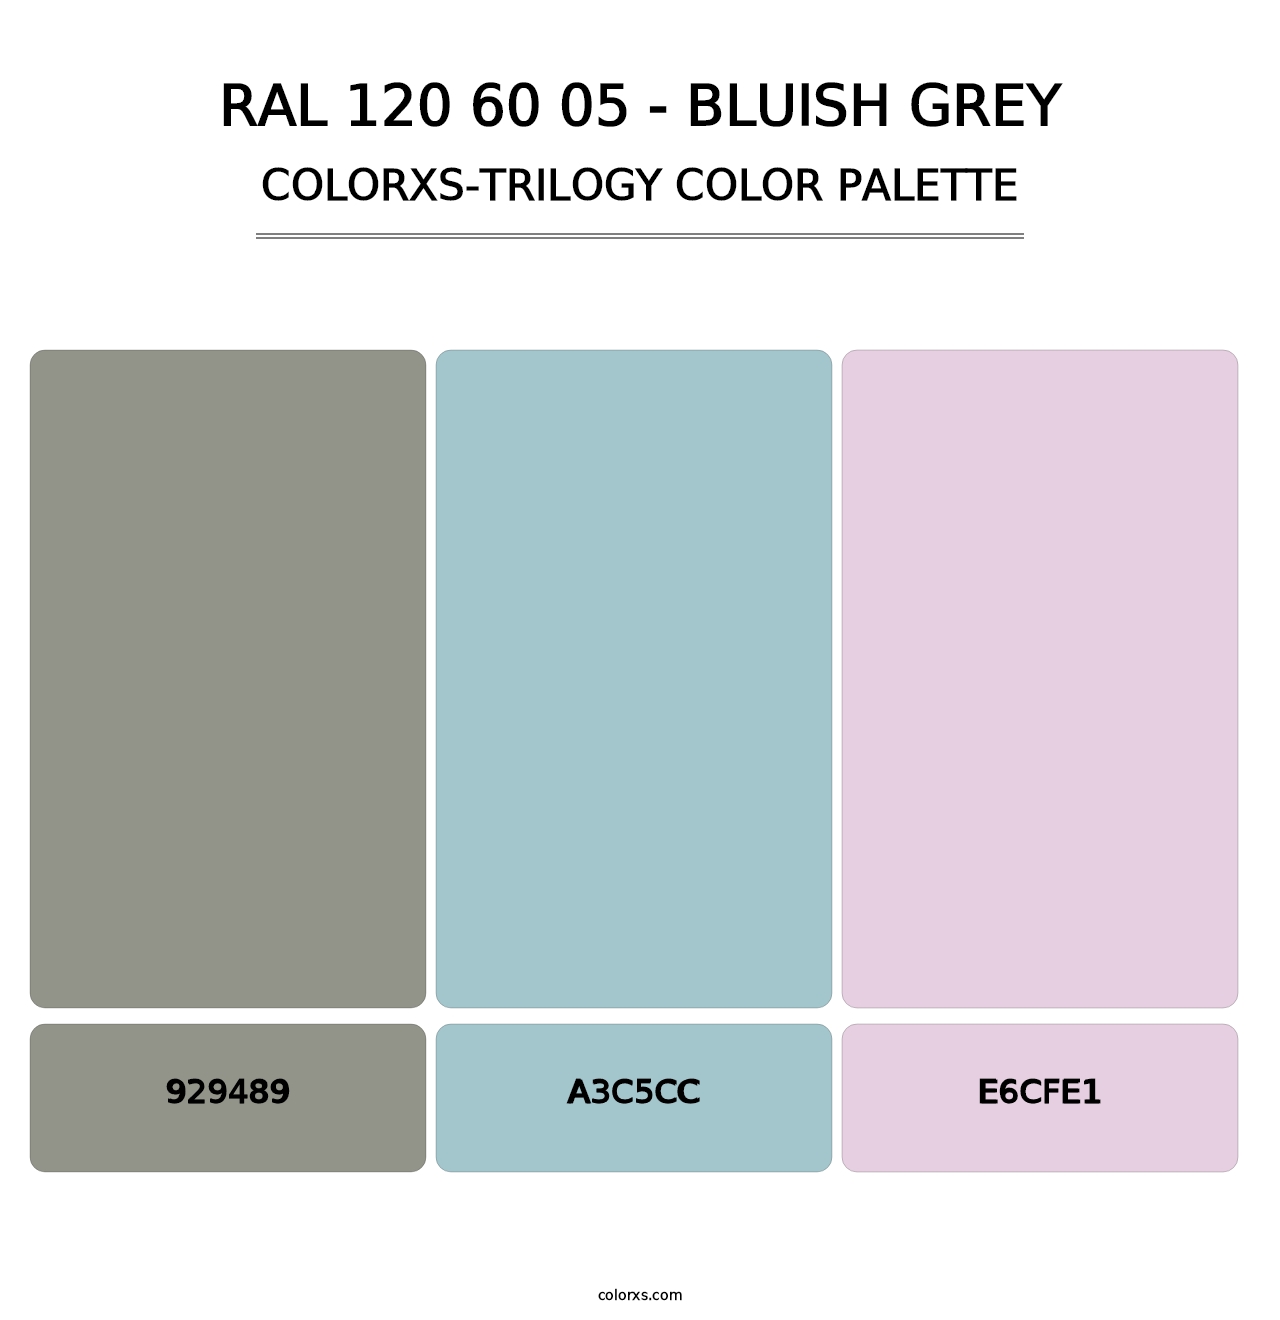 RAL 120 60 05 - Bluish Grey - Colorxs Trilogy Palette